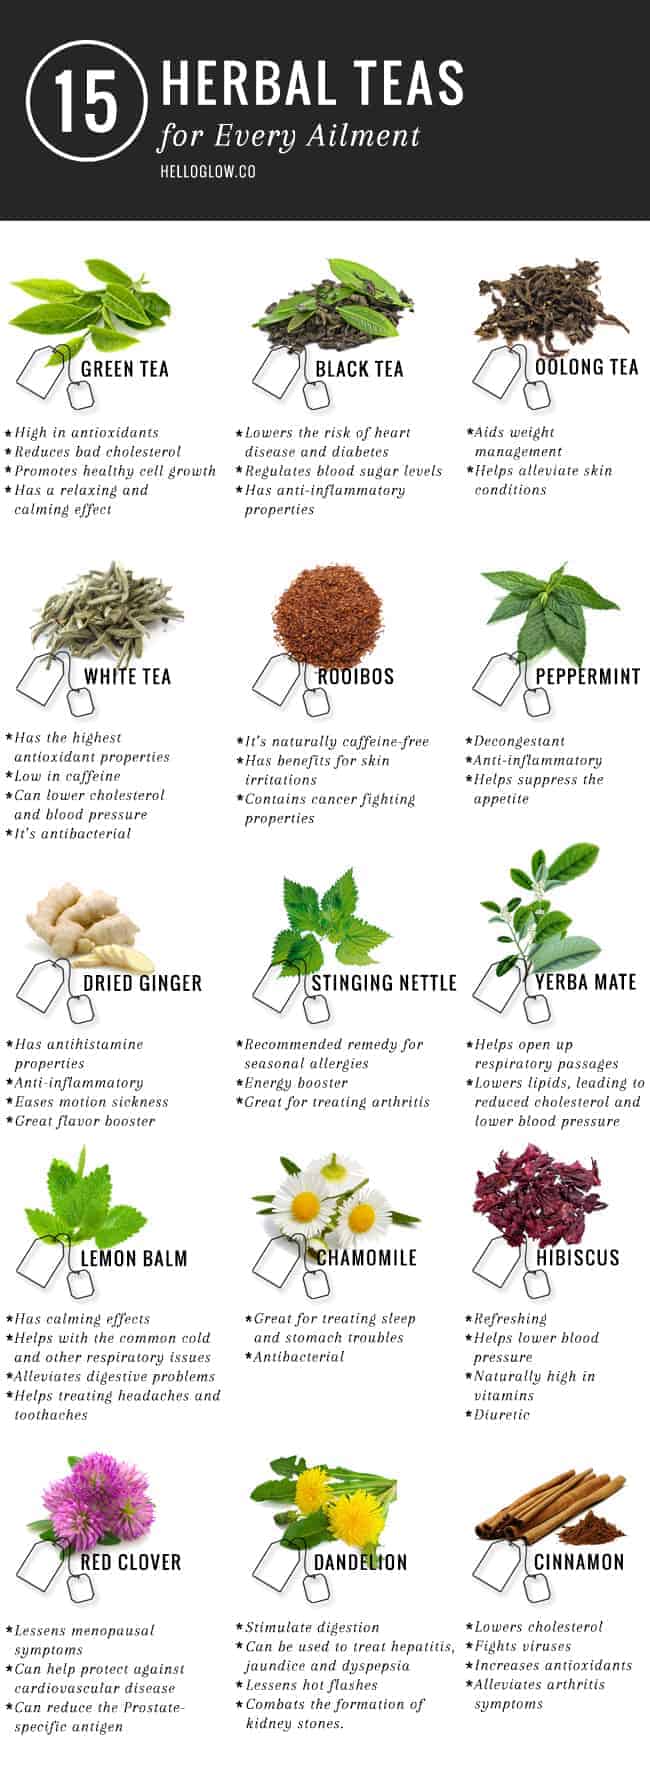 15-herbal-teas-for-every-ailment